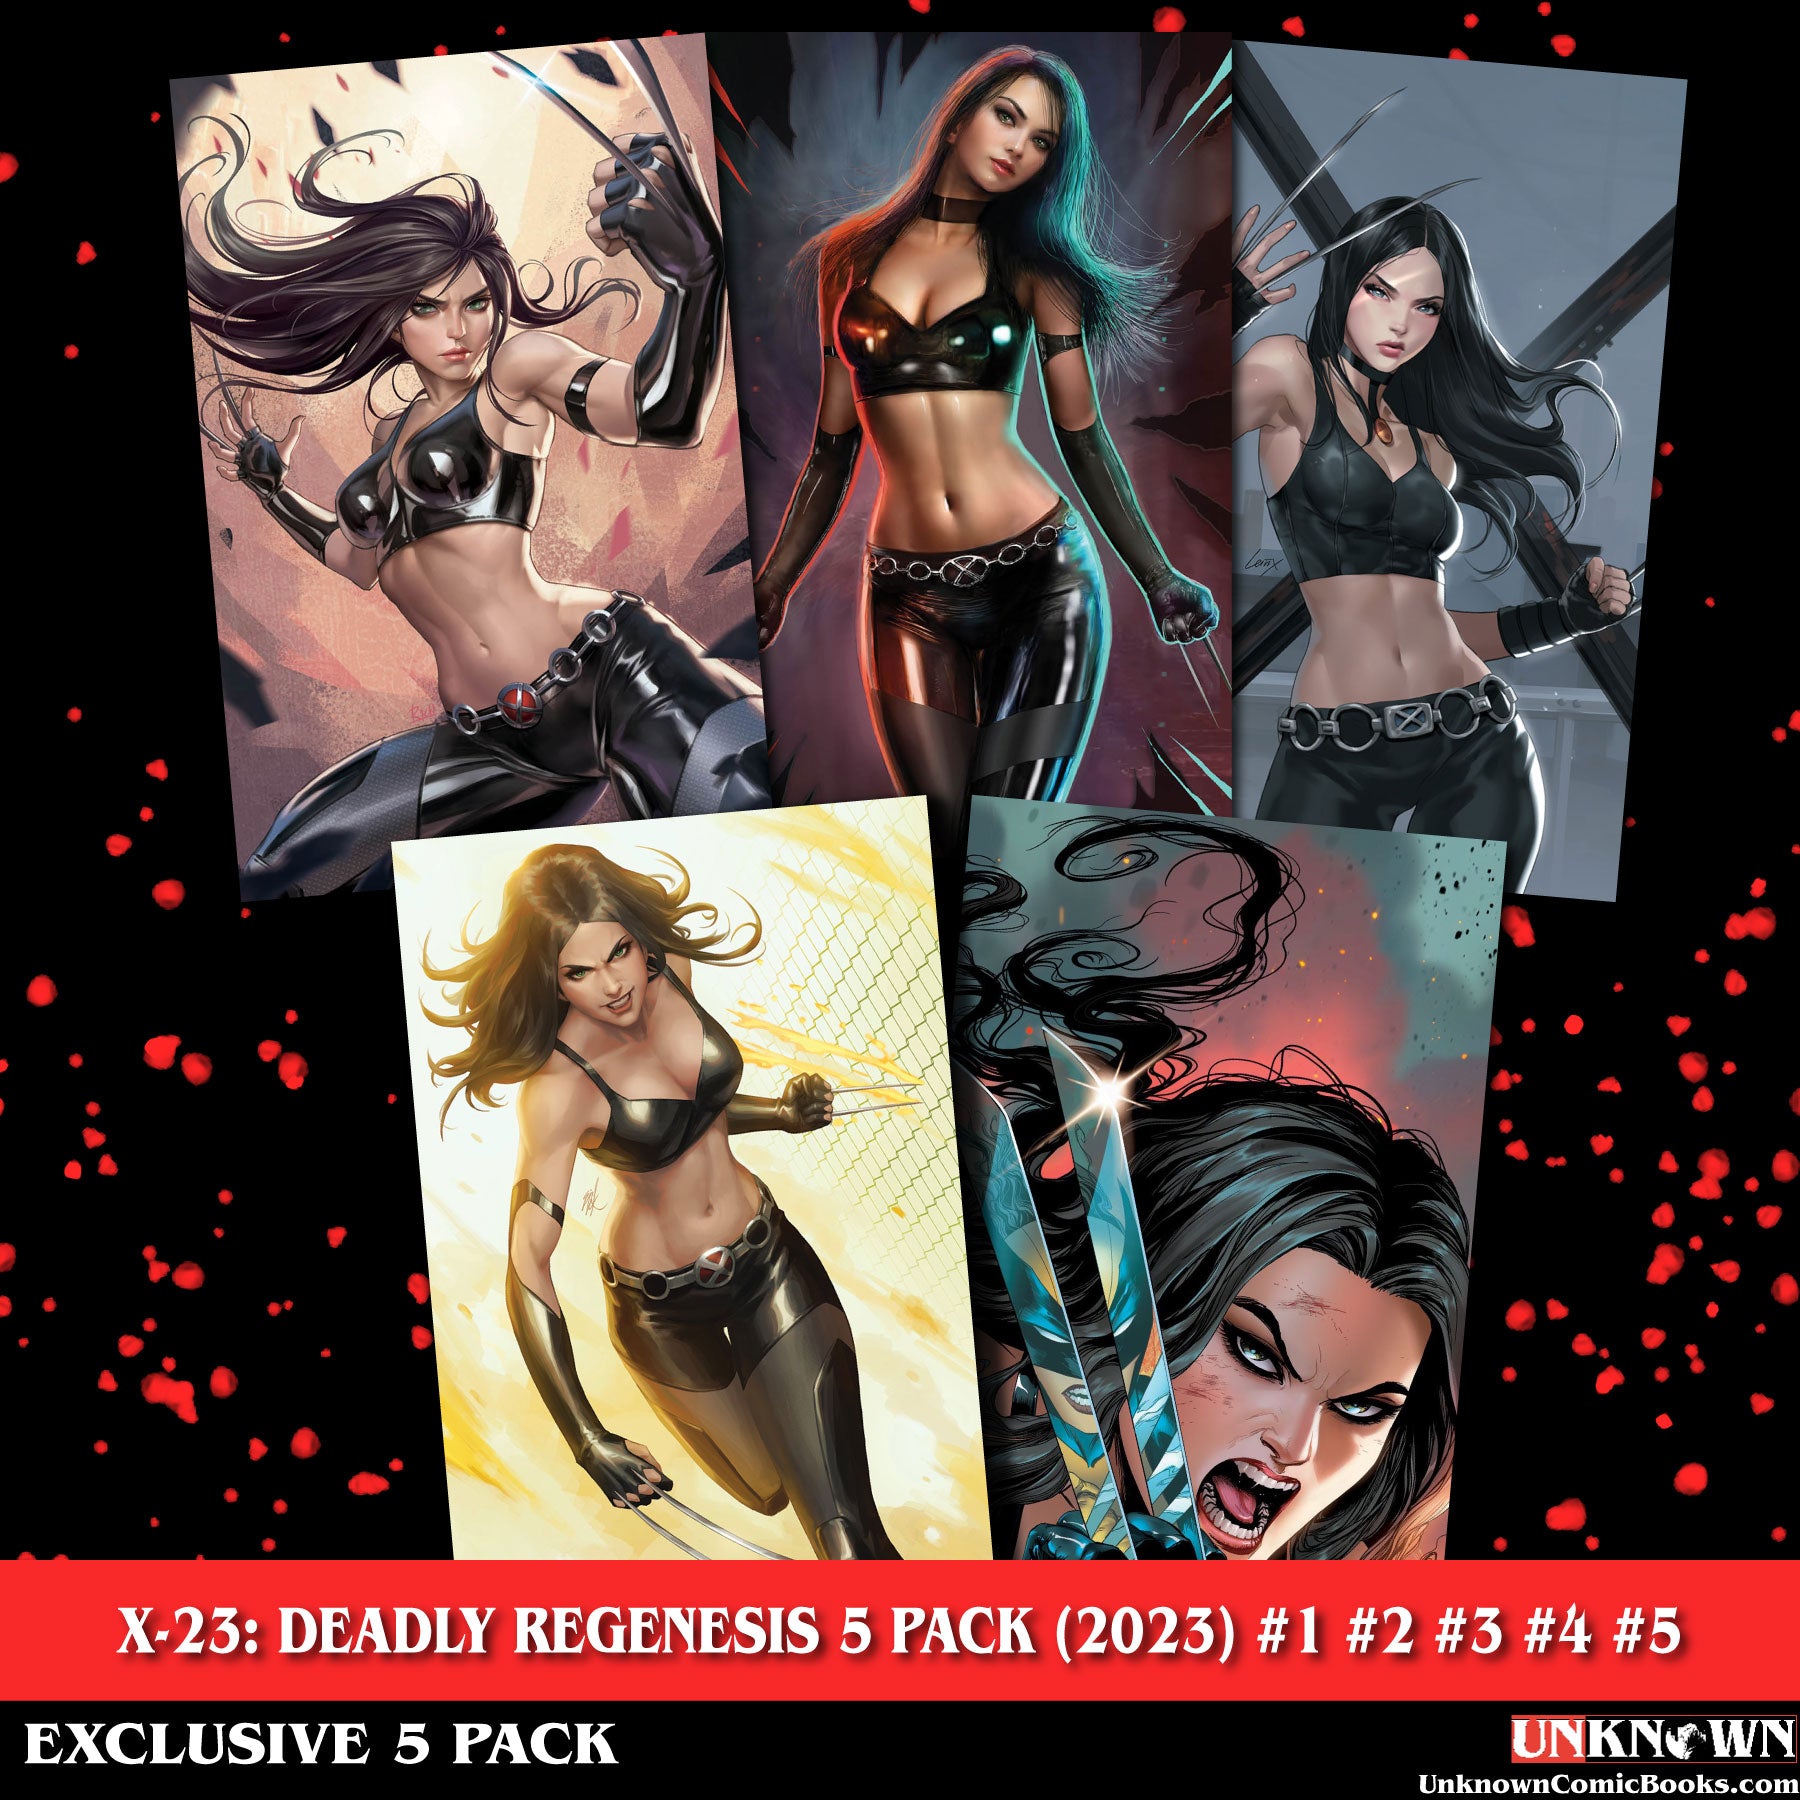 [5 PACK] VIRGIN X-23: DEADLY REGENESIS #1, #2, #3, #4, #5 UNKNOWN COMICS EXCLUSIVE VAR (07/26/2023)